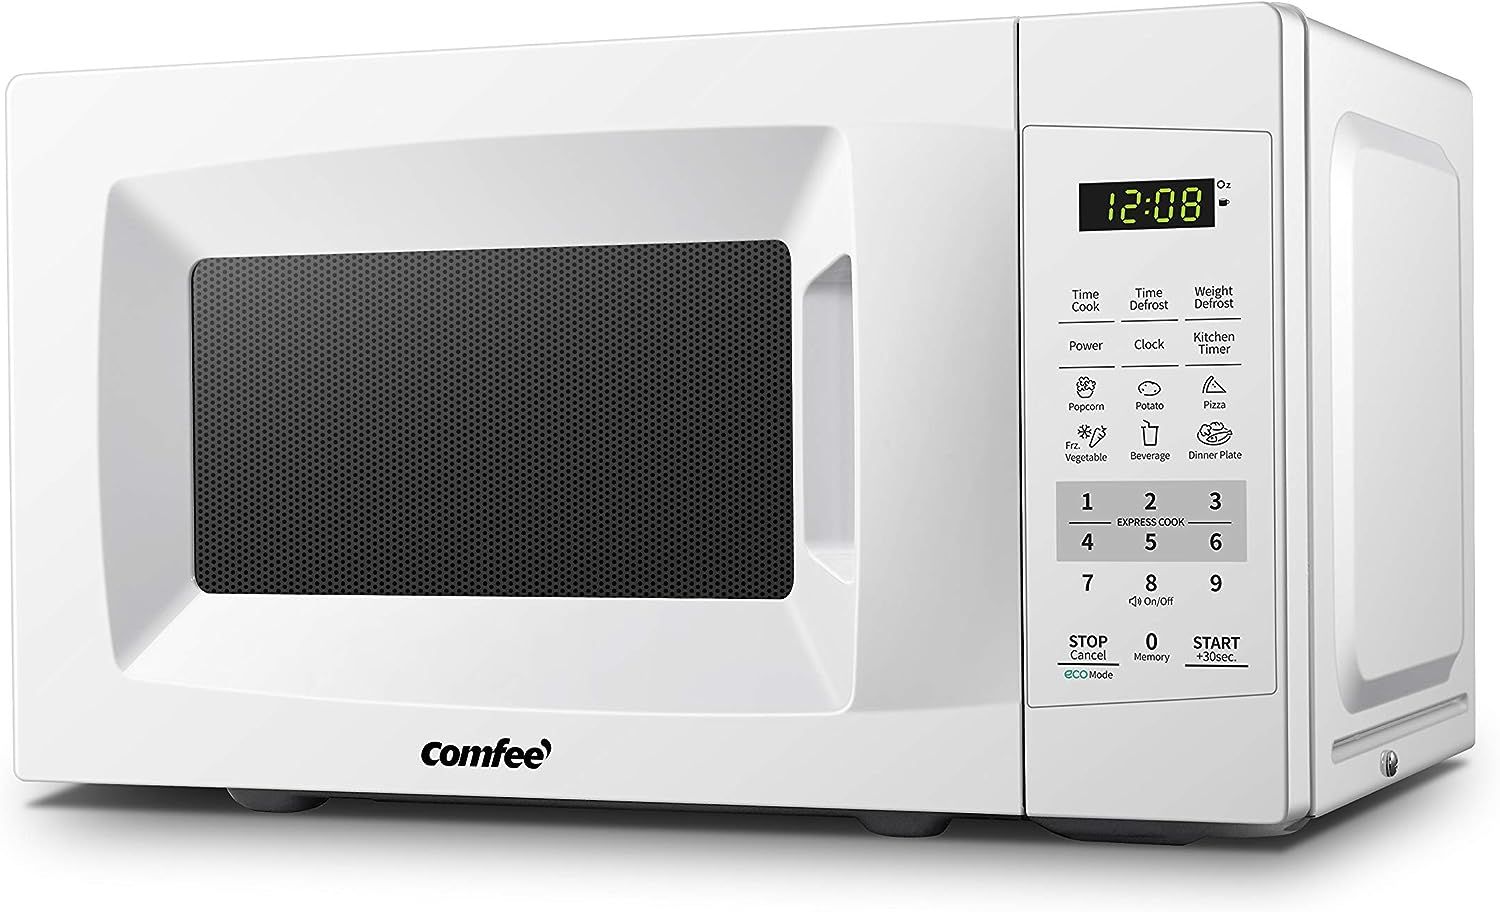 COMFEE' Microwave Oven Logo